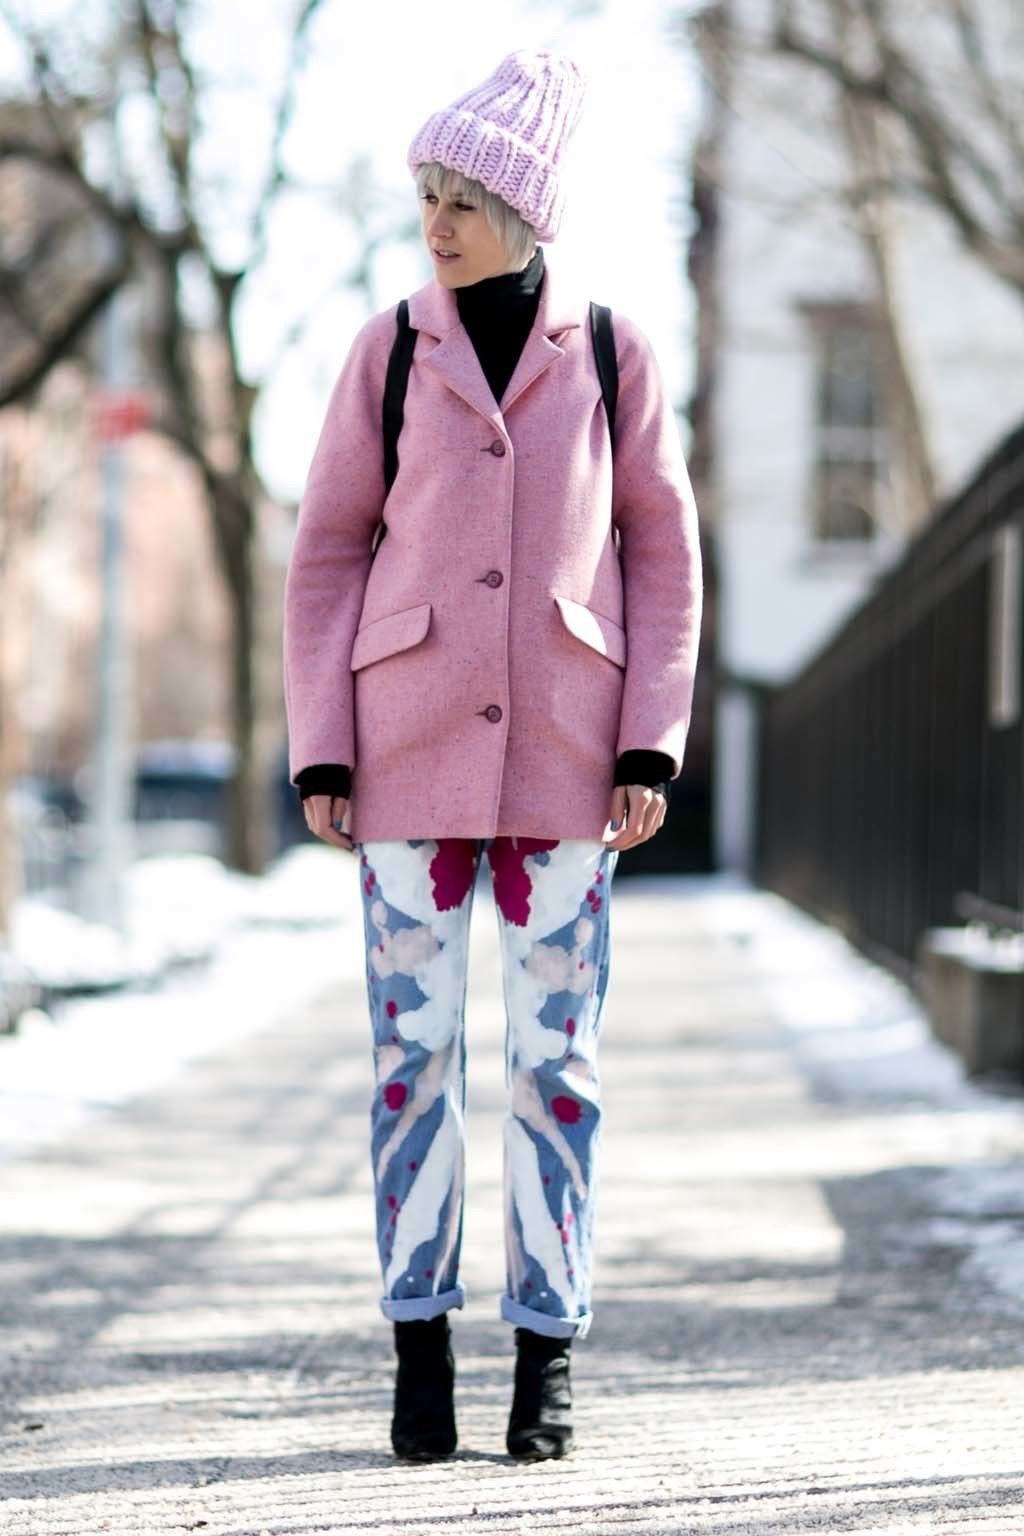 Розовое пальто шапка. Шапка к розовому пальто. Розовая шапка уличная мода. Стиль с розовой шапкой. Уличная мода Нью-Йорка.